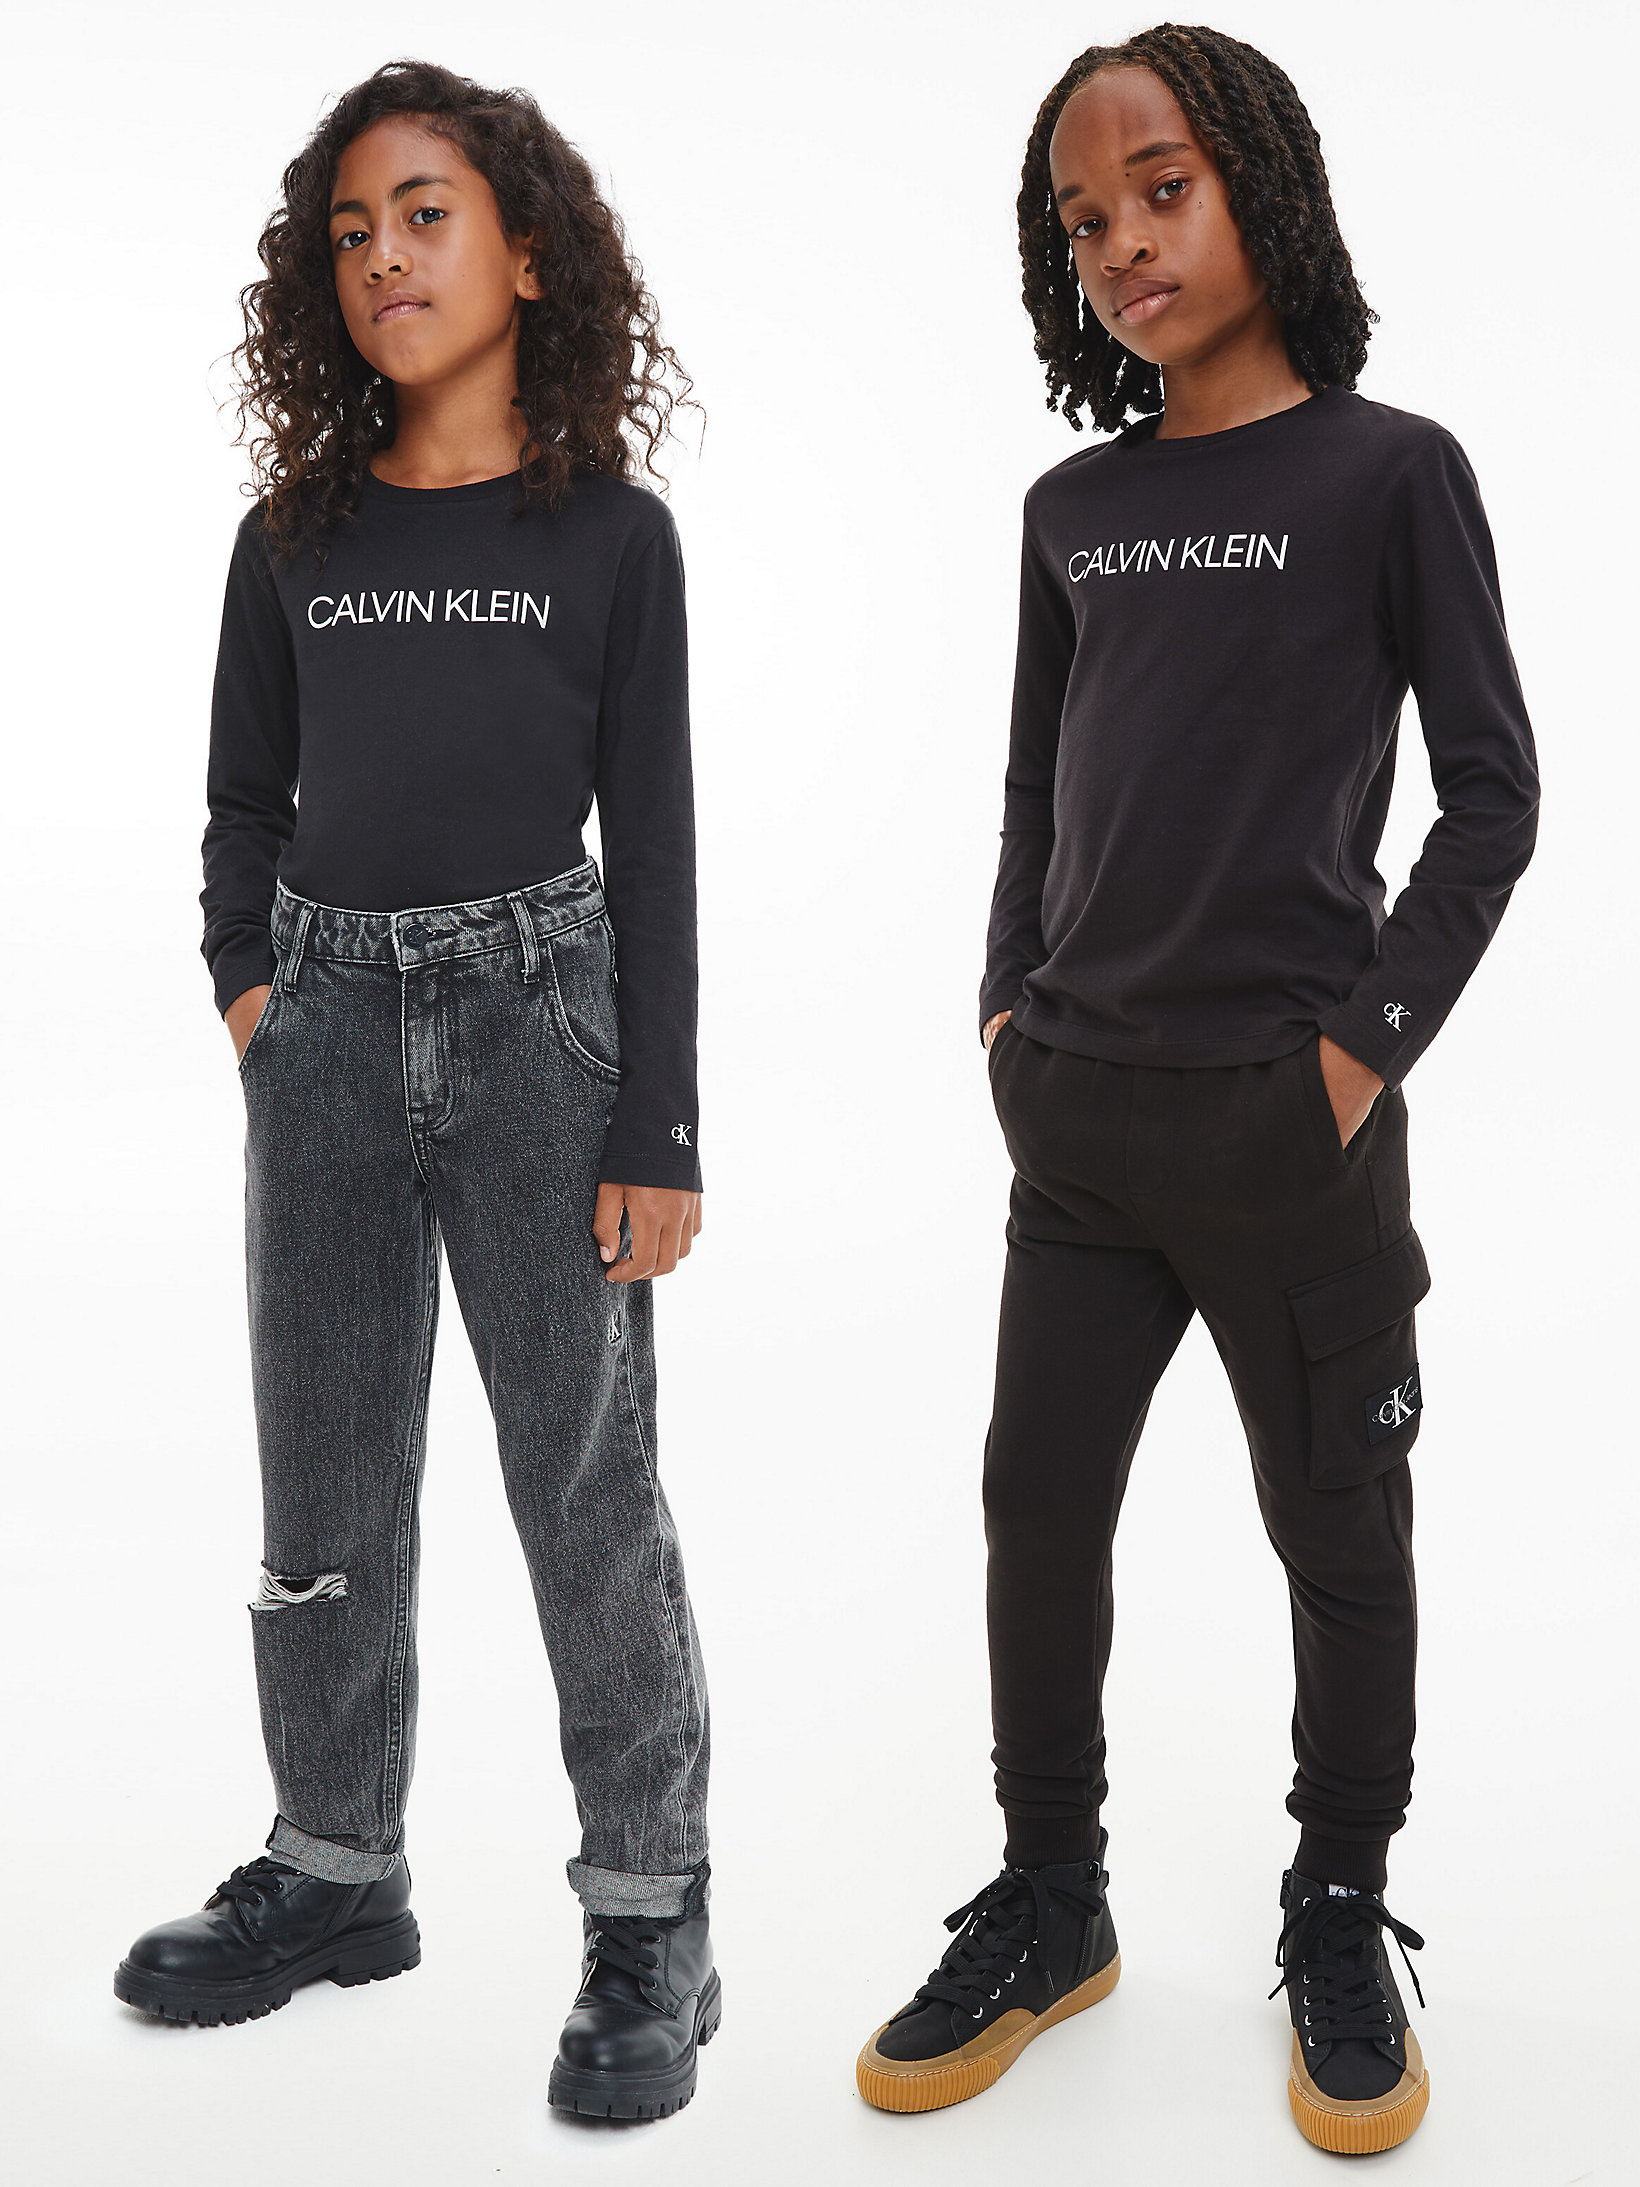 CK Black Unisex Long Sleeve T-Shirt undefined kids unisex Calvin Klein